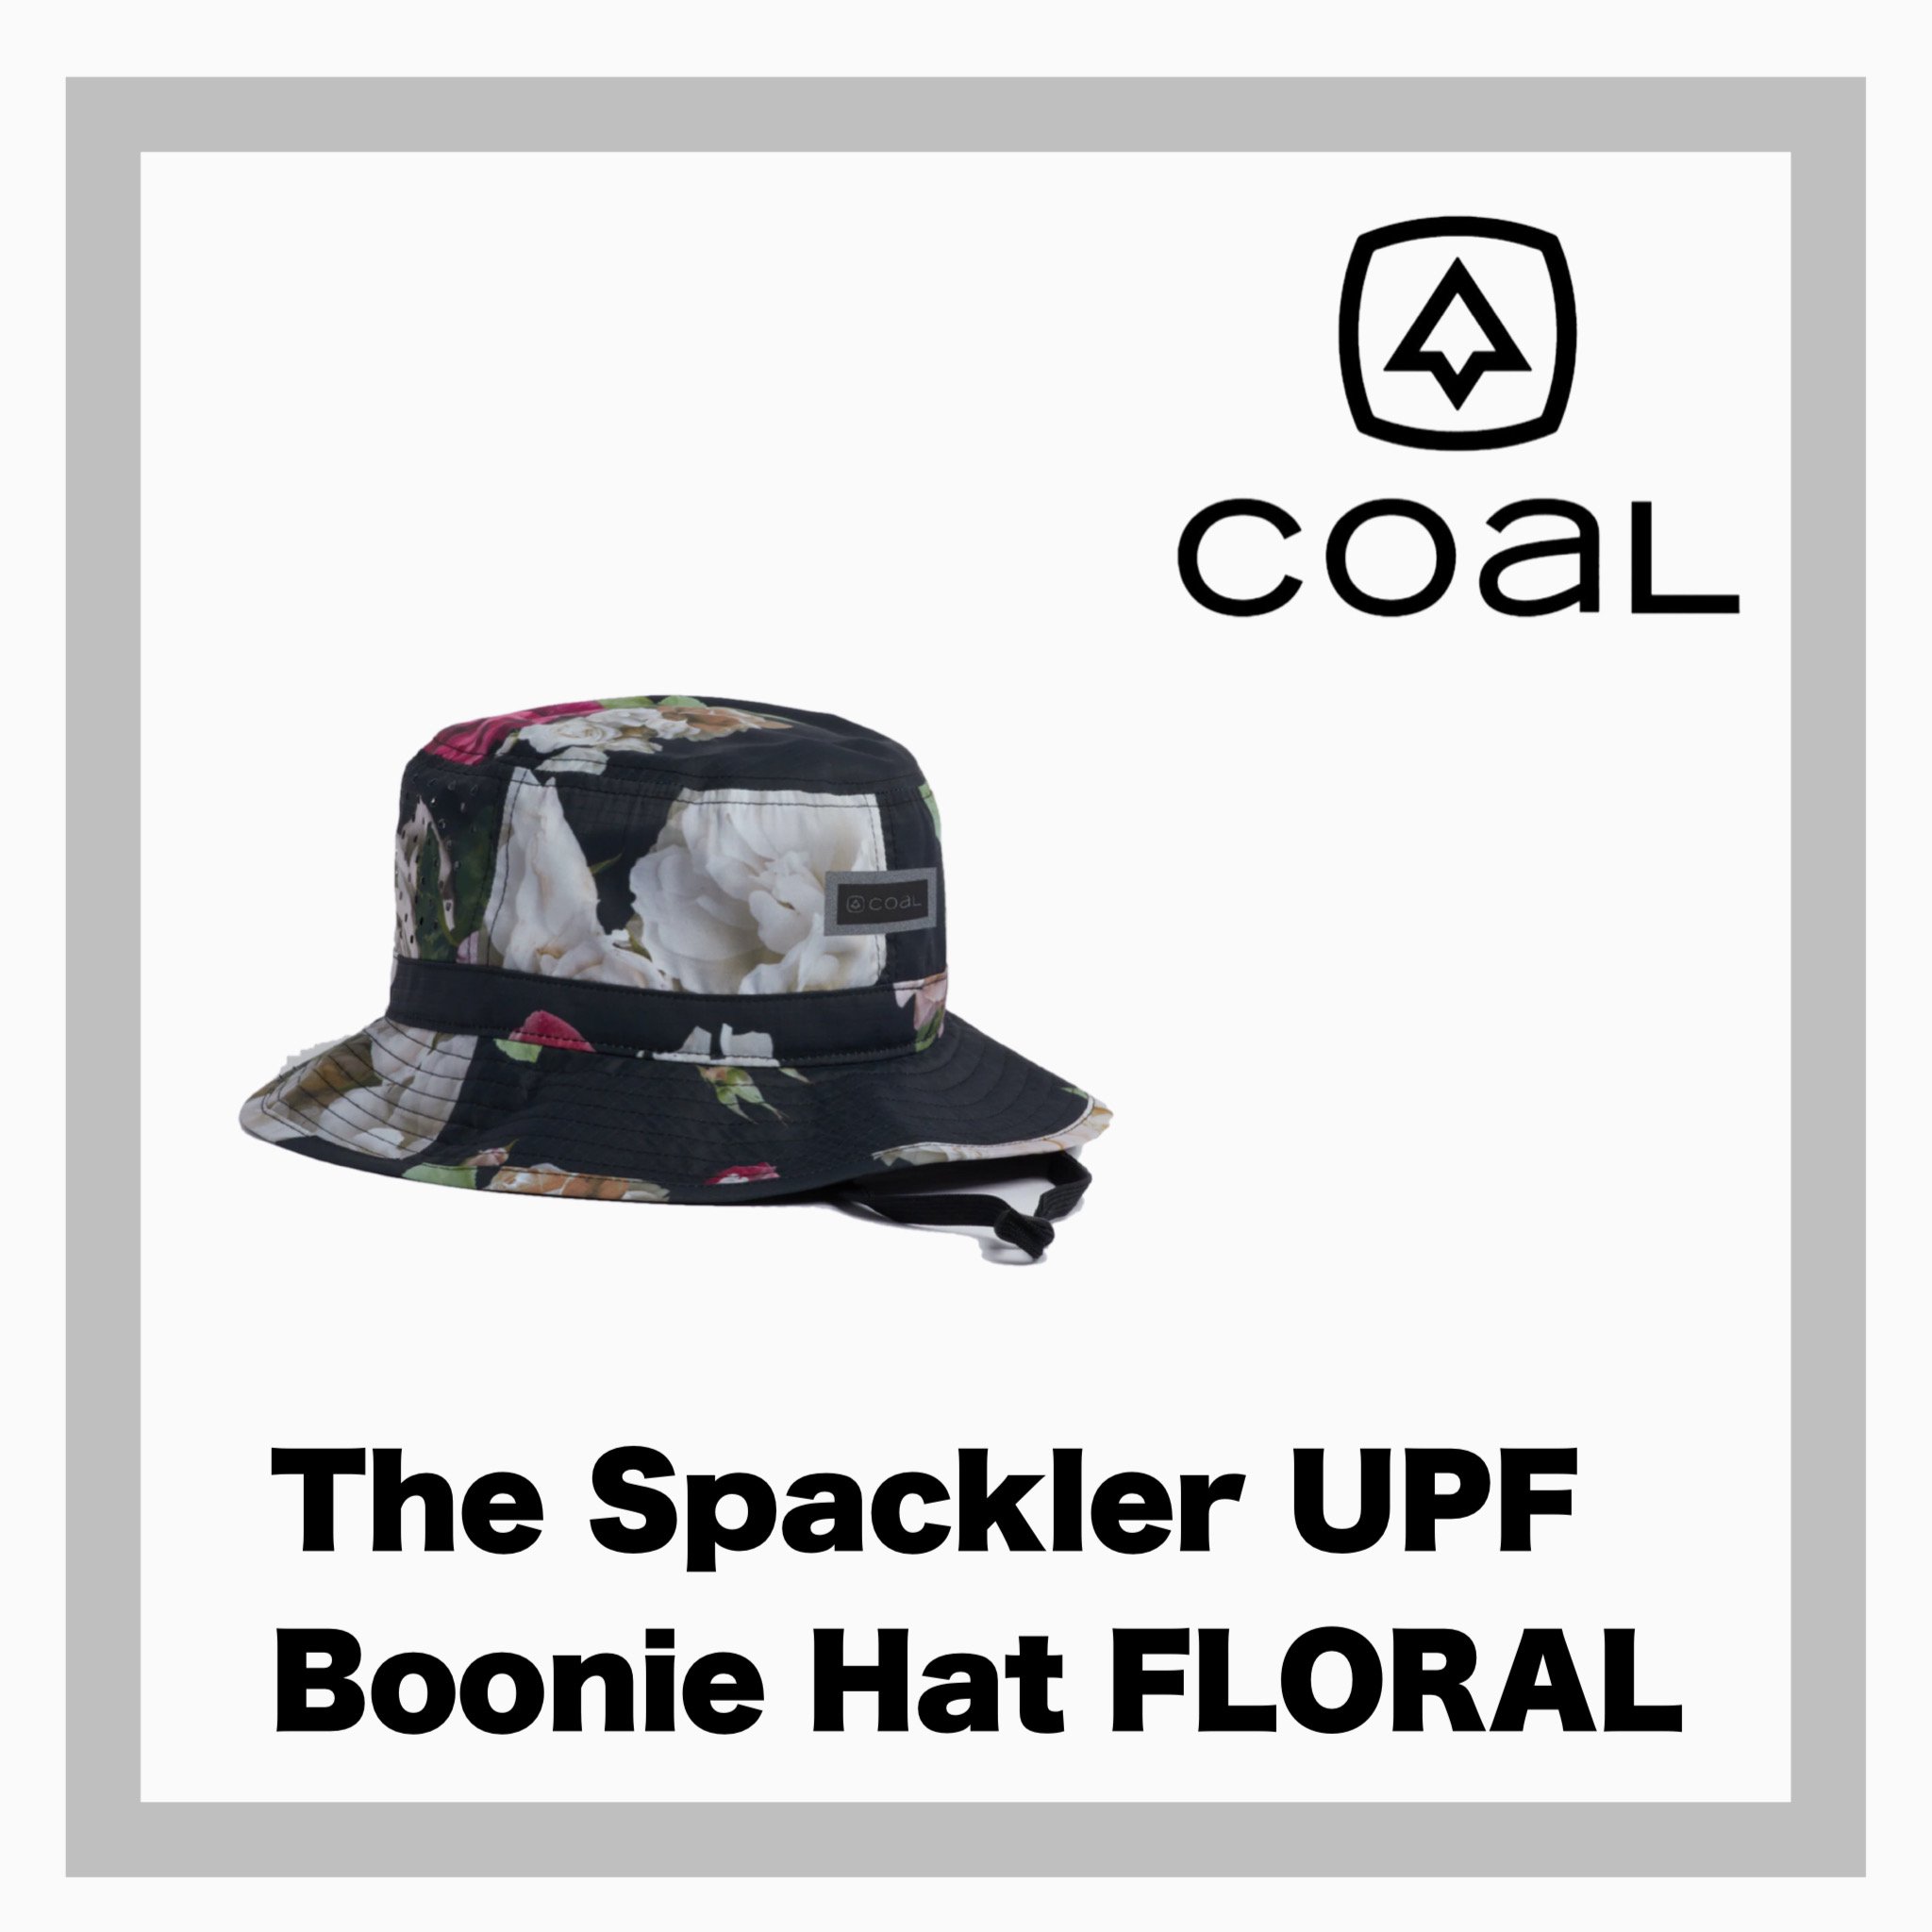 COALThe Spackler UPF Boonie Hat BLACK